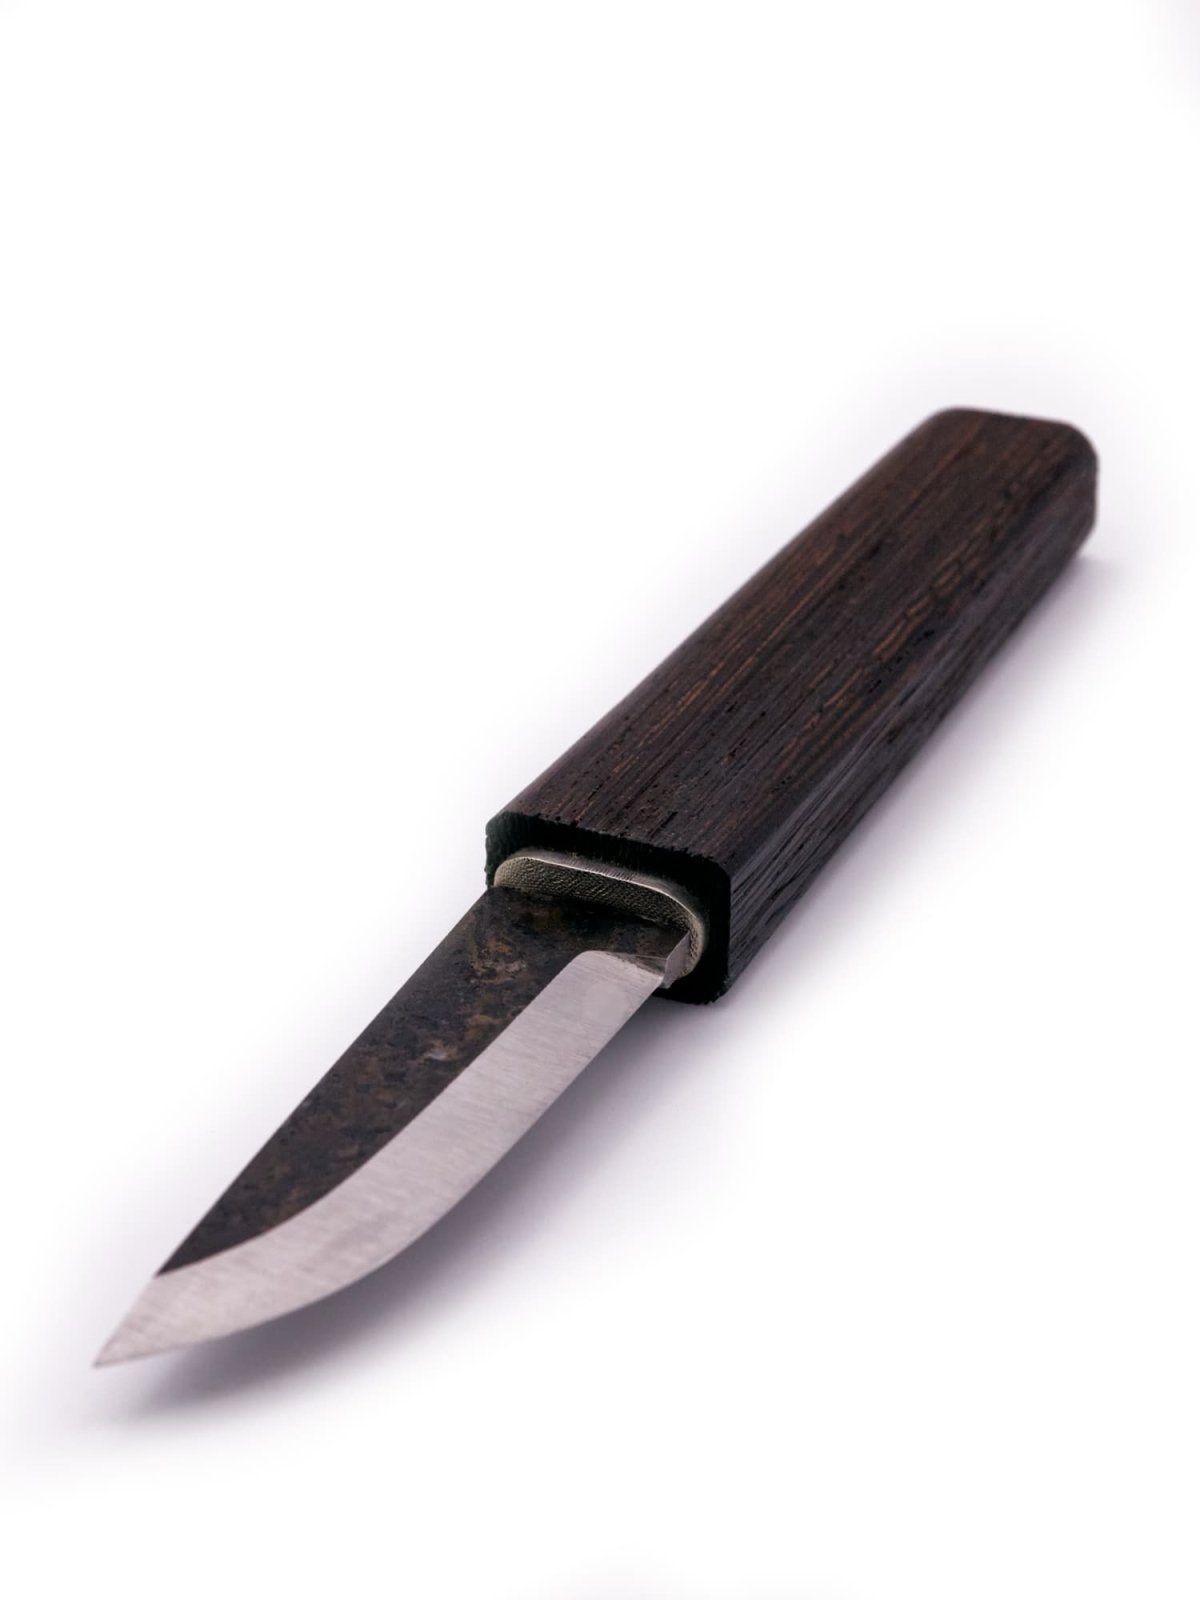 Outdoormesser - Messer - Unikat - Jagdmesser - handgemacht